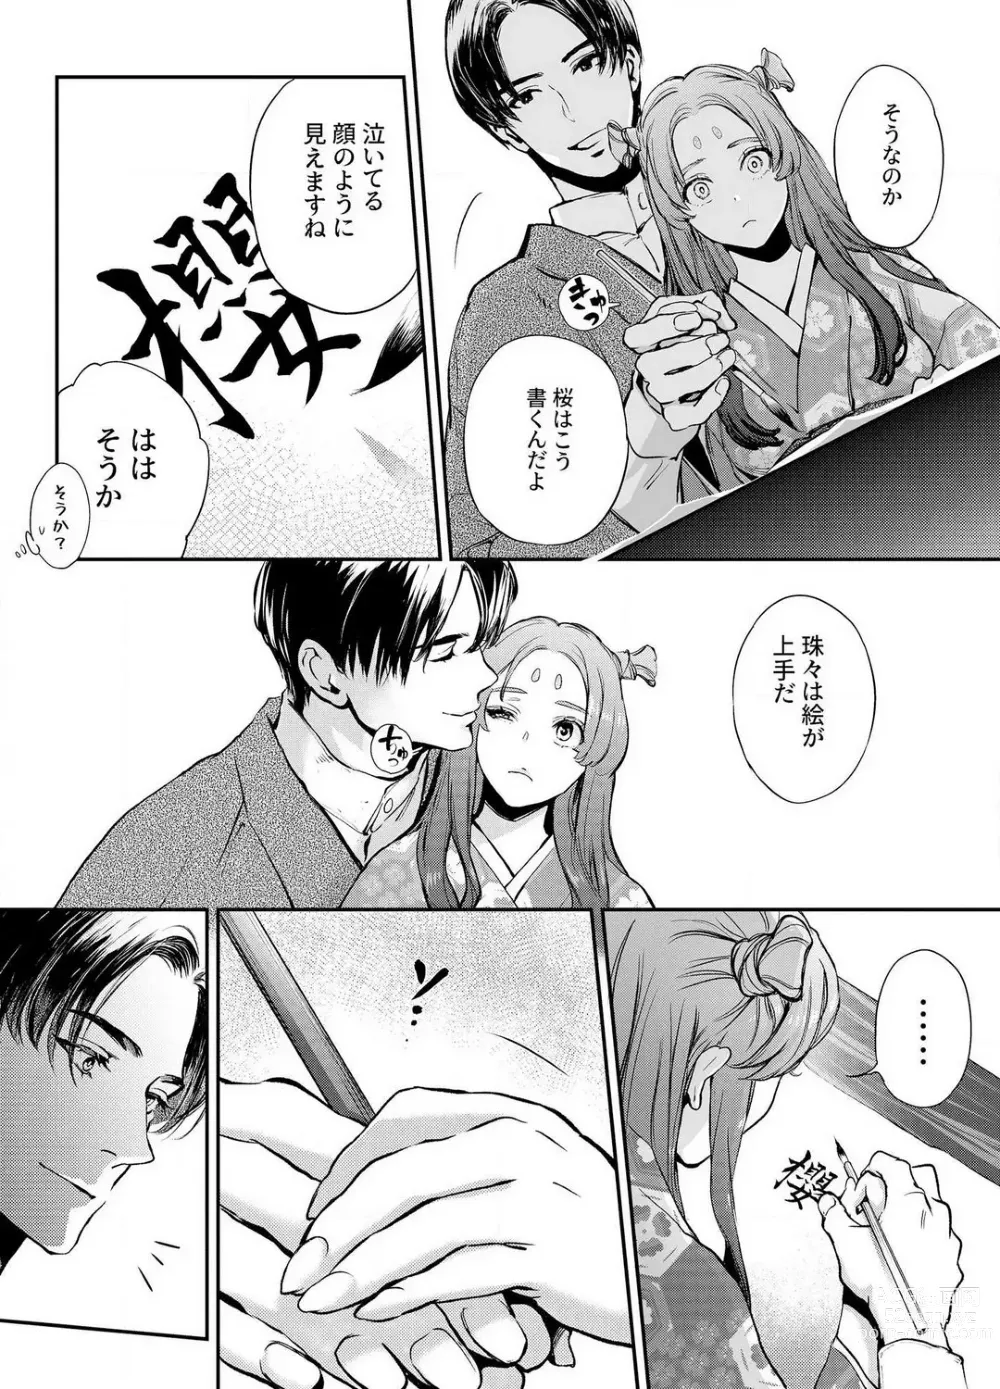 Page 22 of manga Katawa no Sakura 1-4